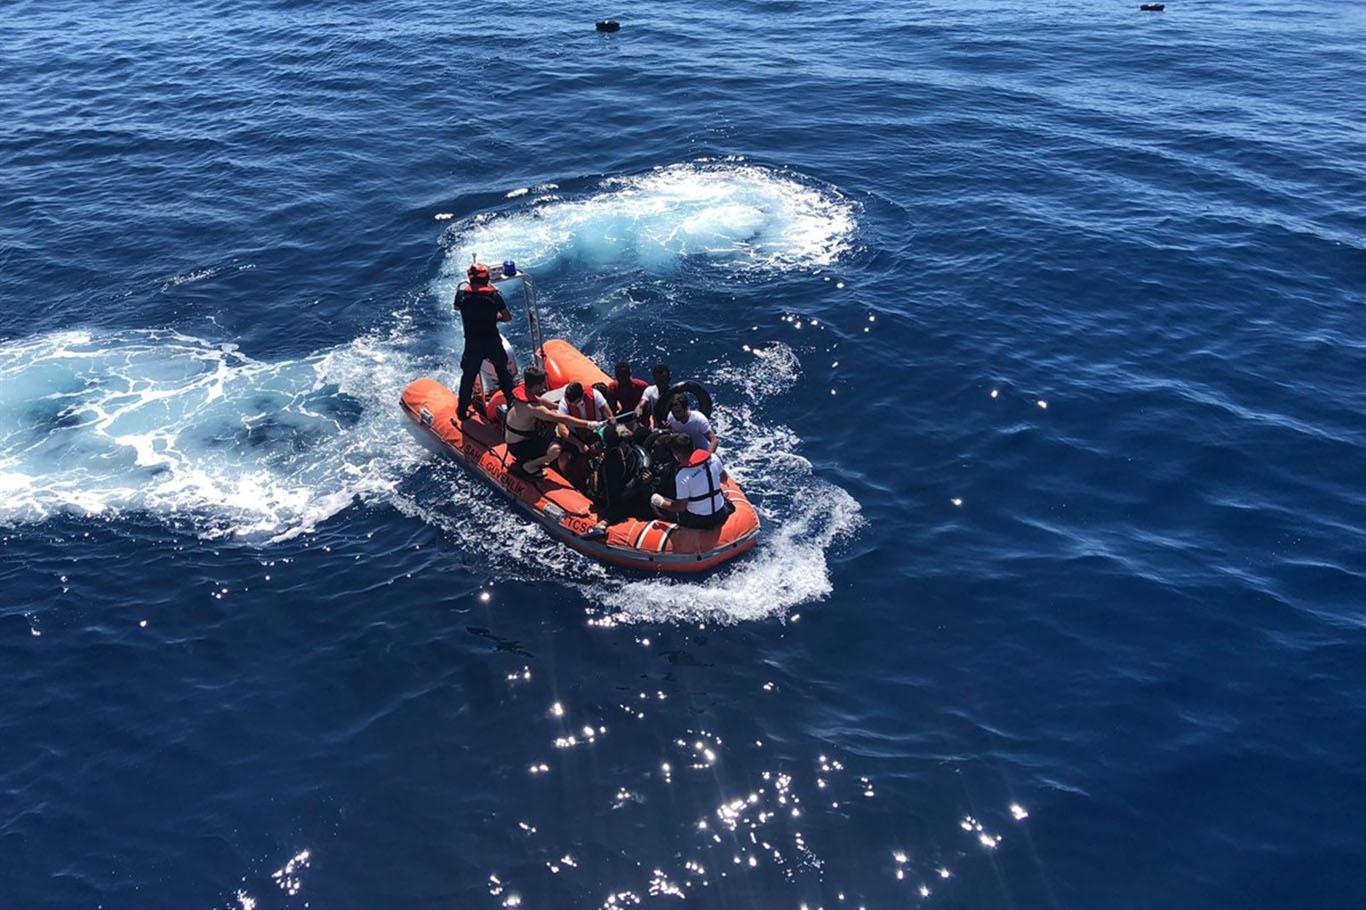 66 irregular migrants rescued off Turkey's Aegean and Mediterranean coasts